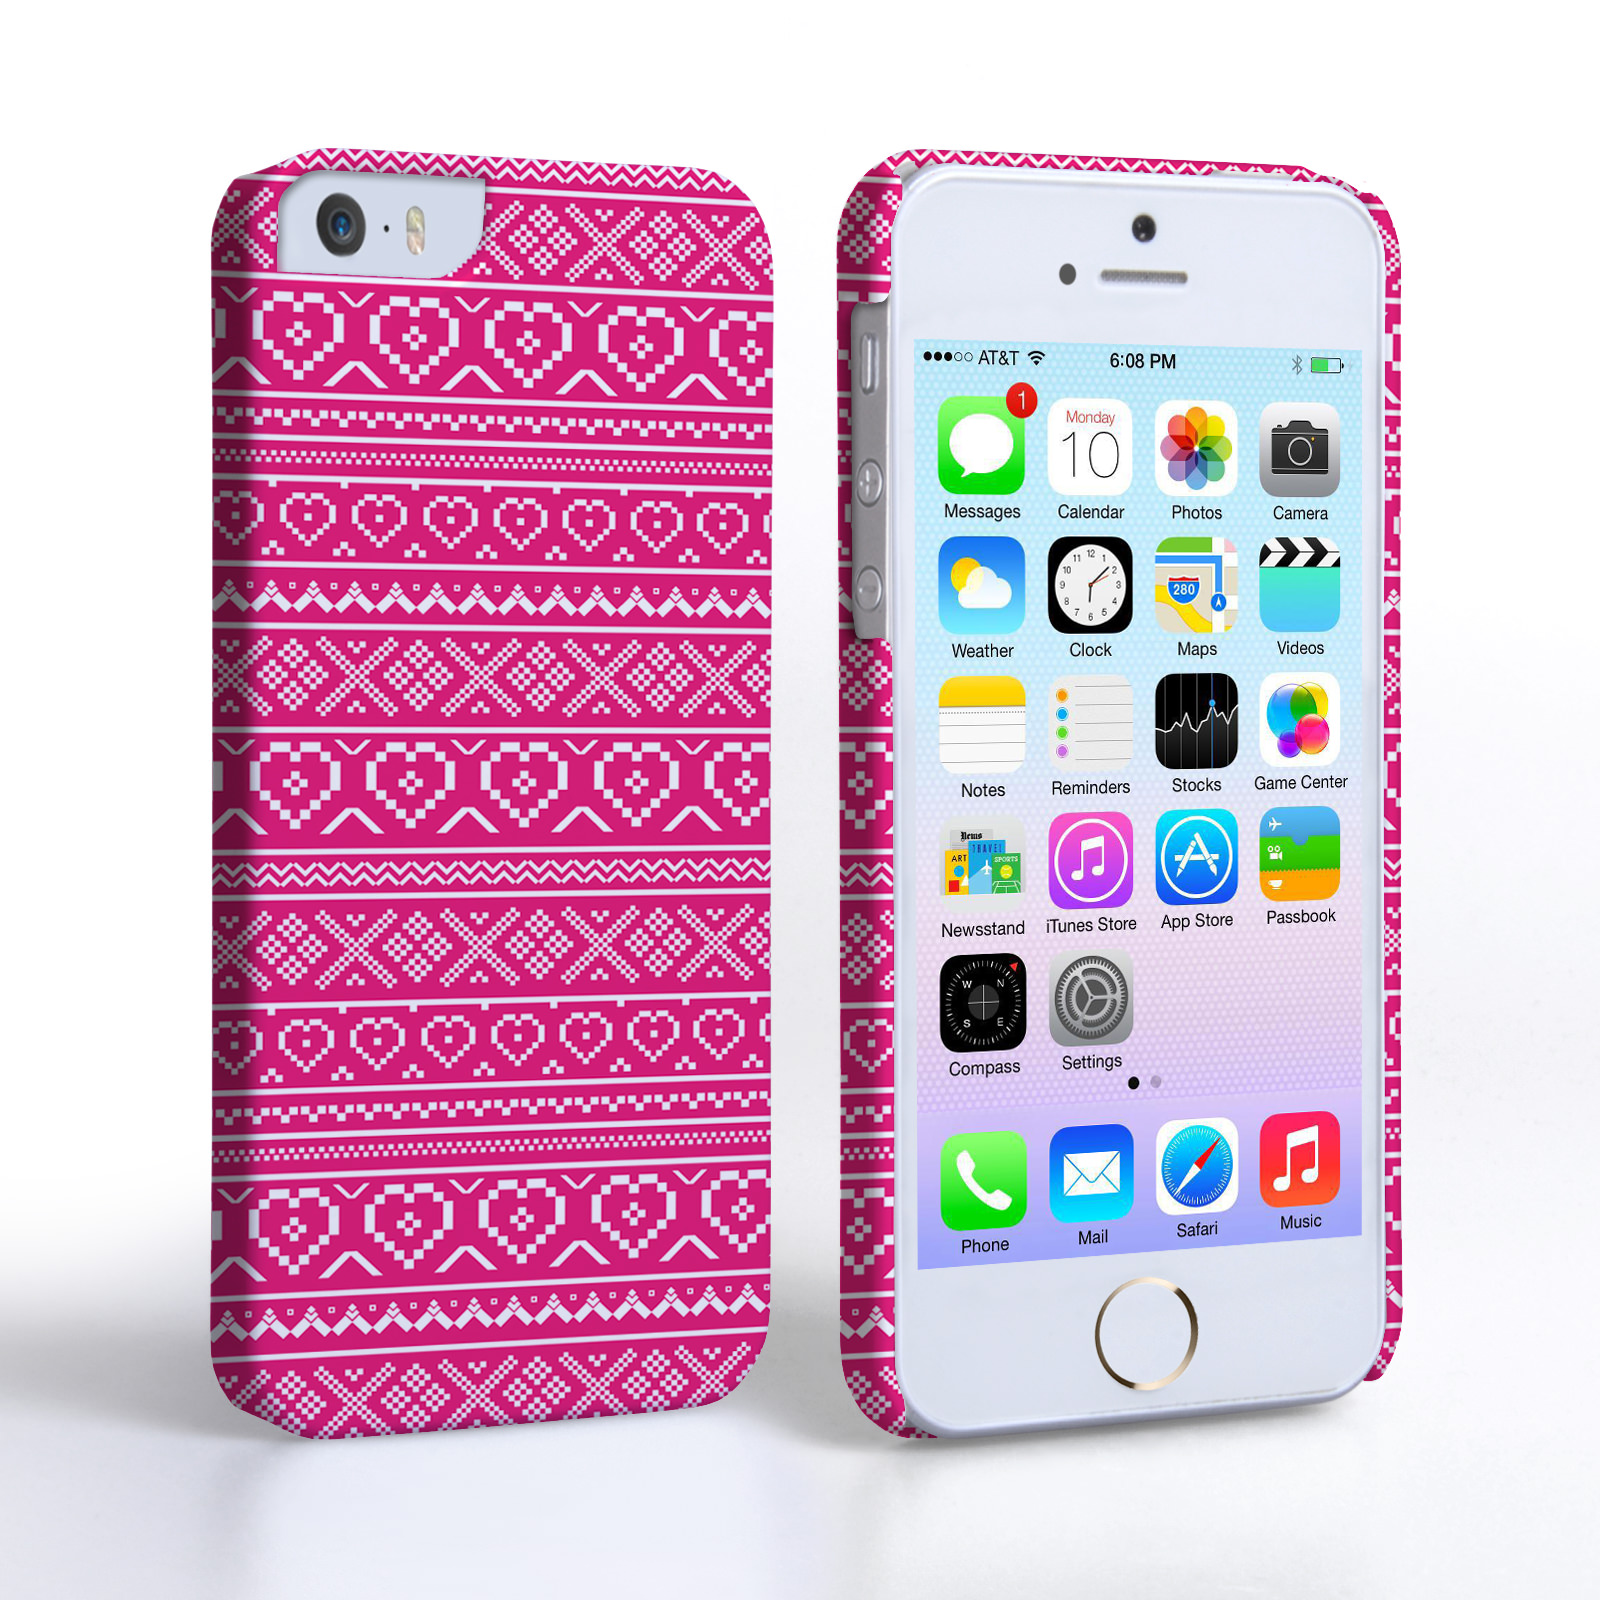 Caseflex iPhone 5/5S Fairisle Case – Pink and White